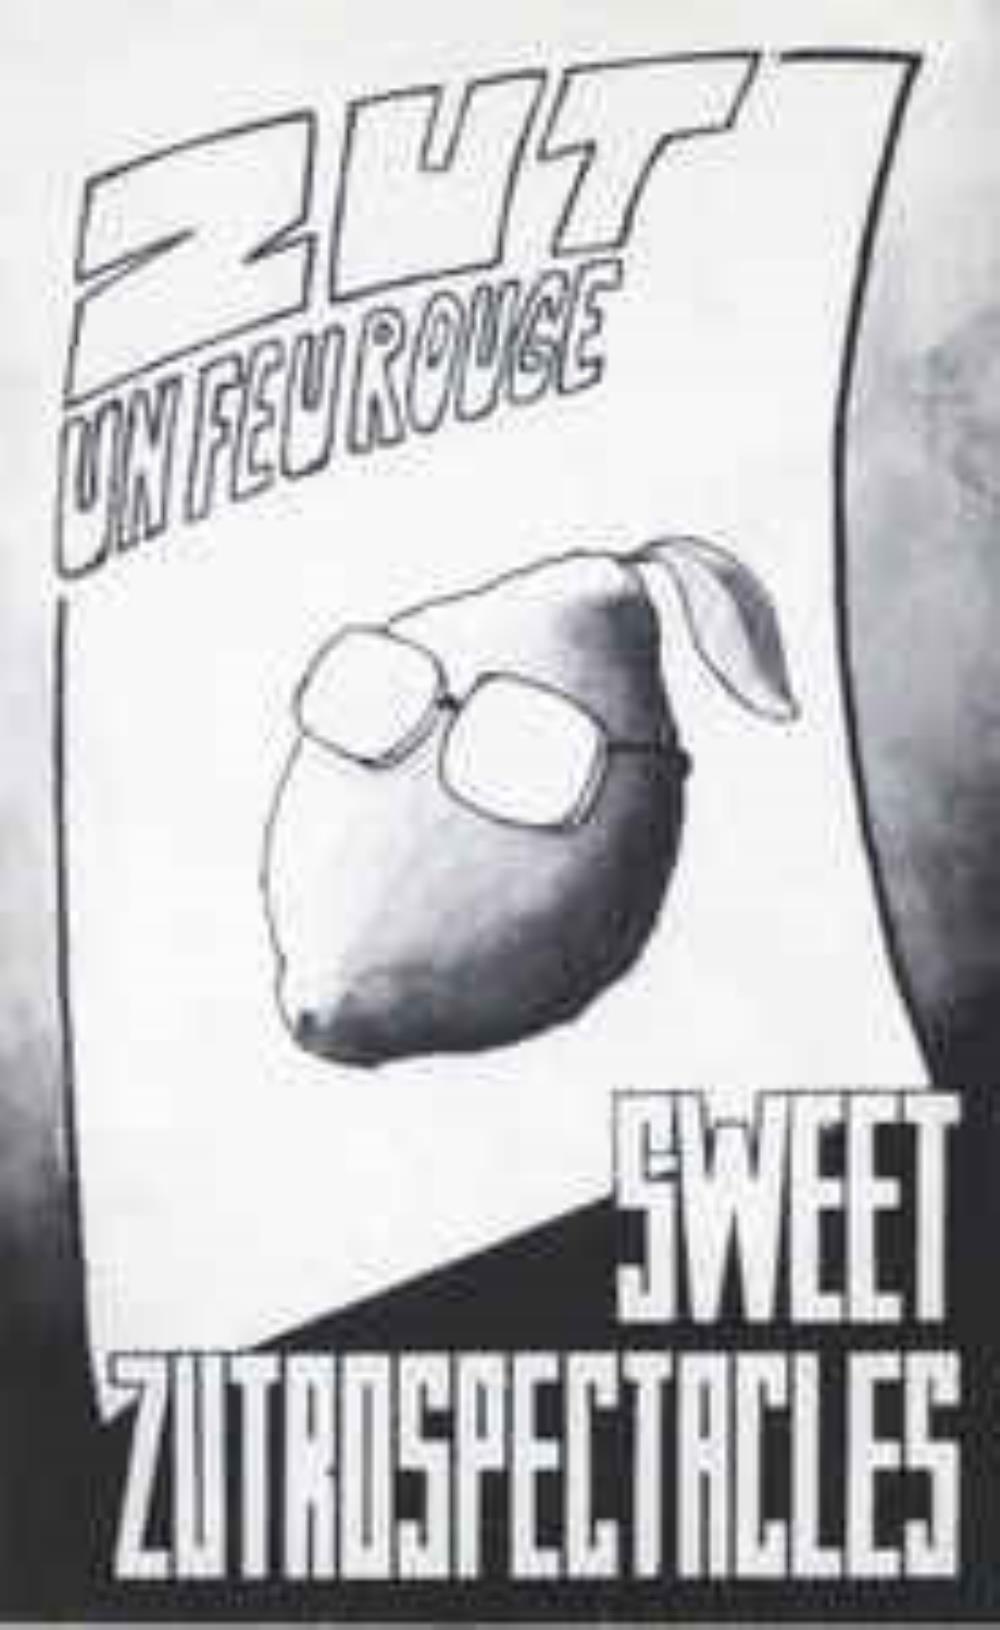 Zut Un Feu Rouge Sweet Zutrospectacles album cover